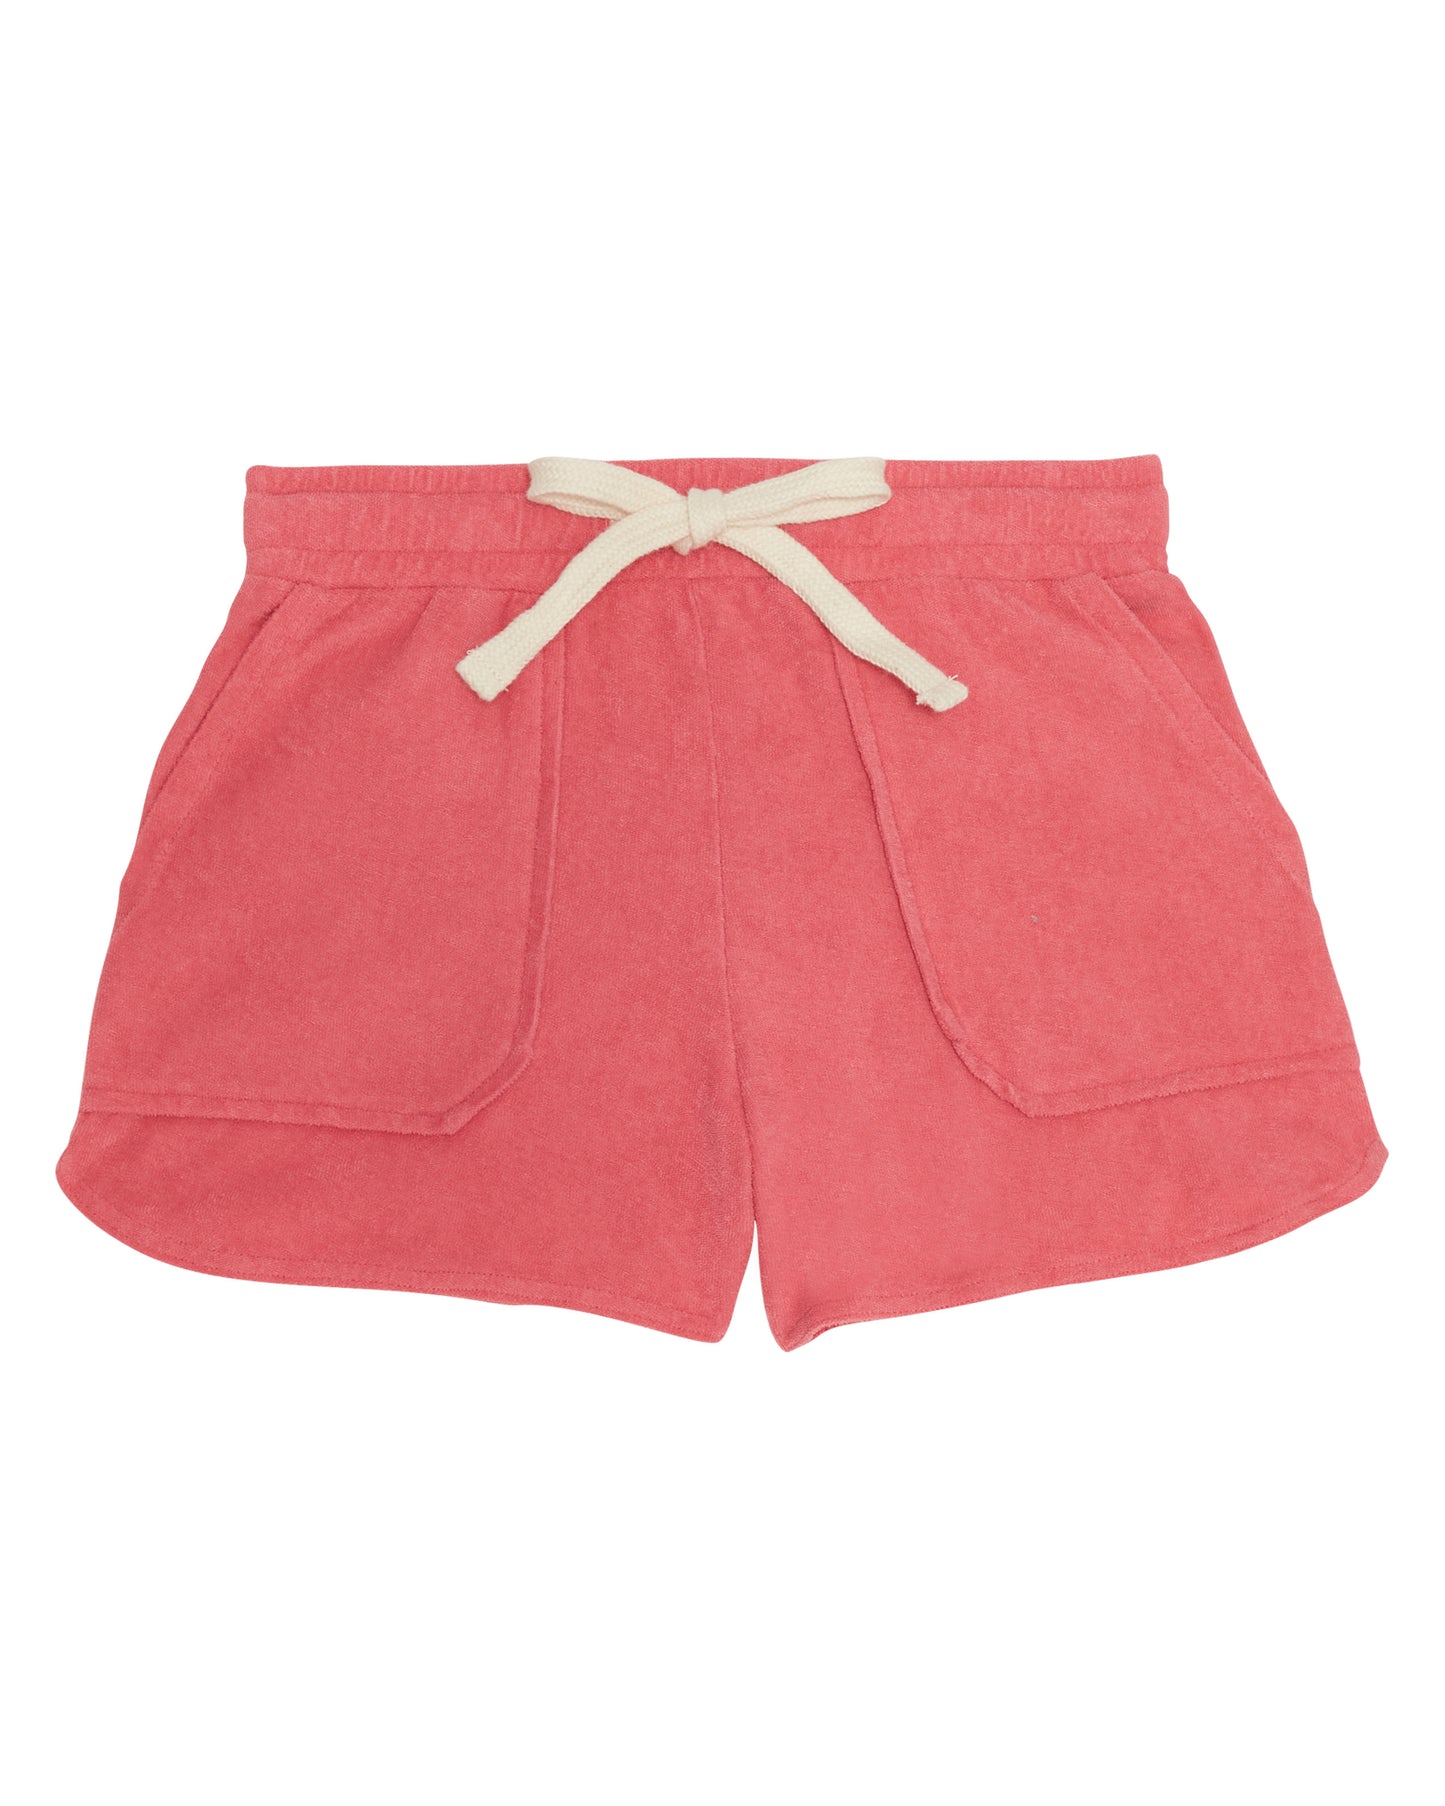 Titia Girls' Pink Terry Cotton Fleece Shorts